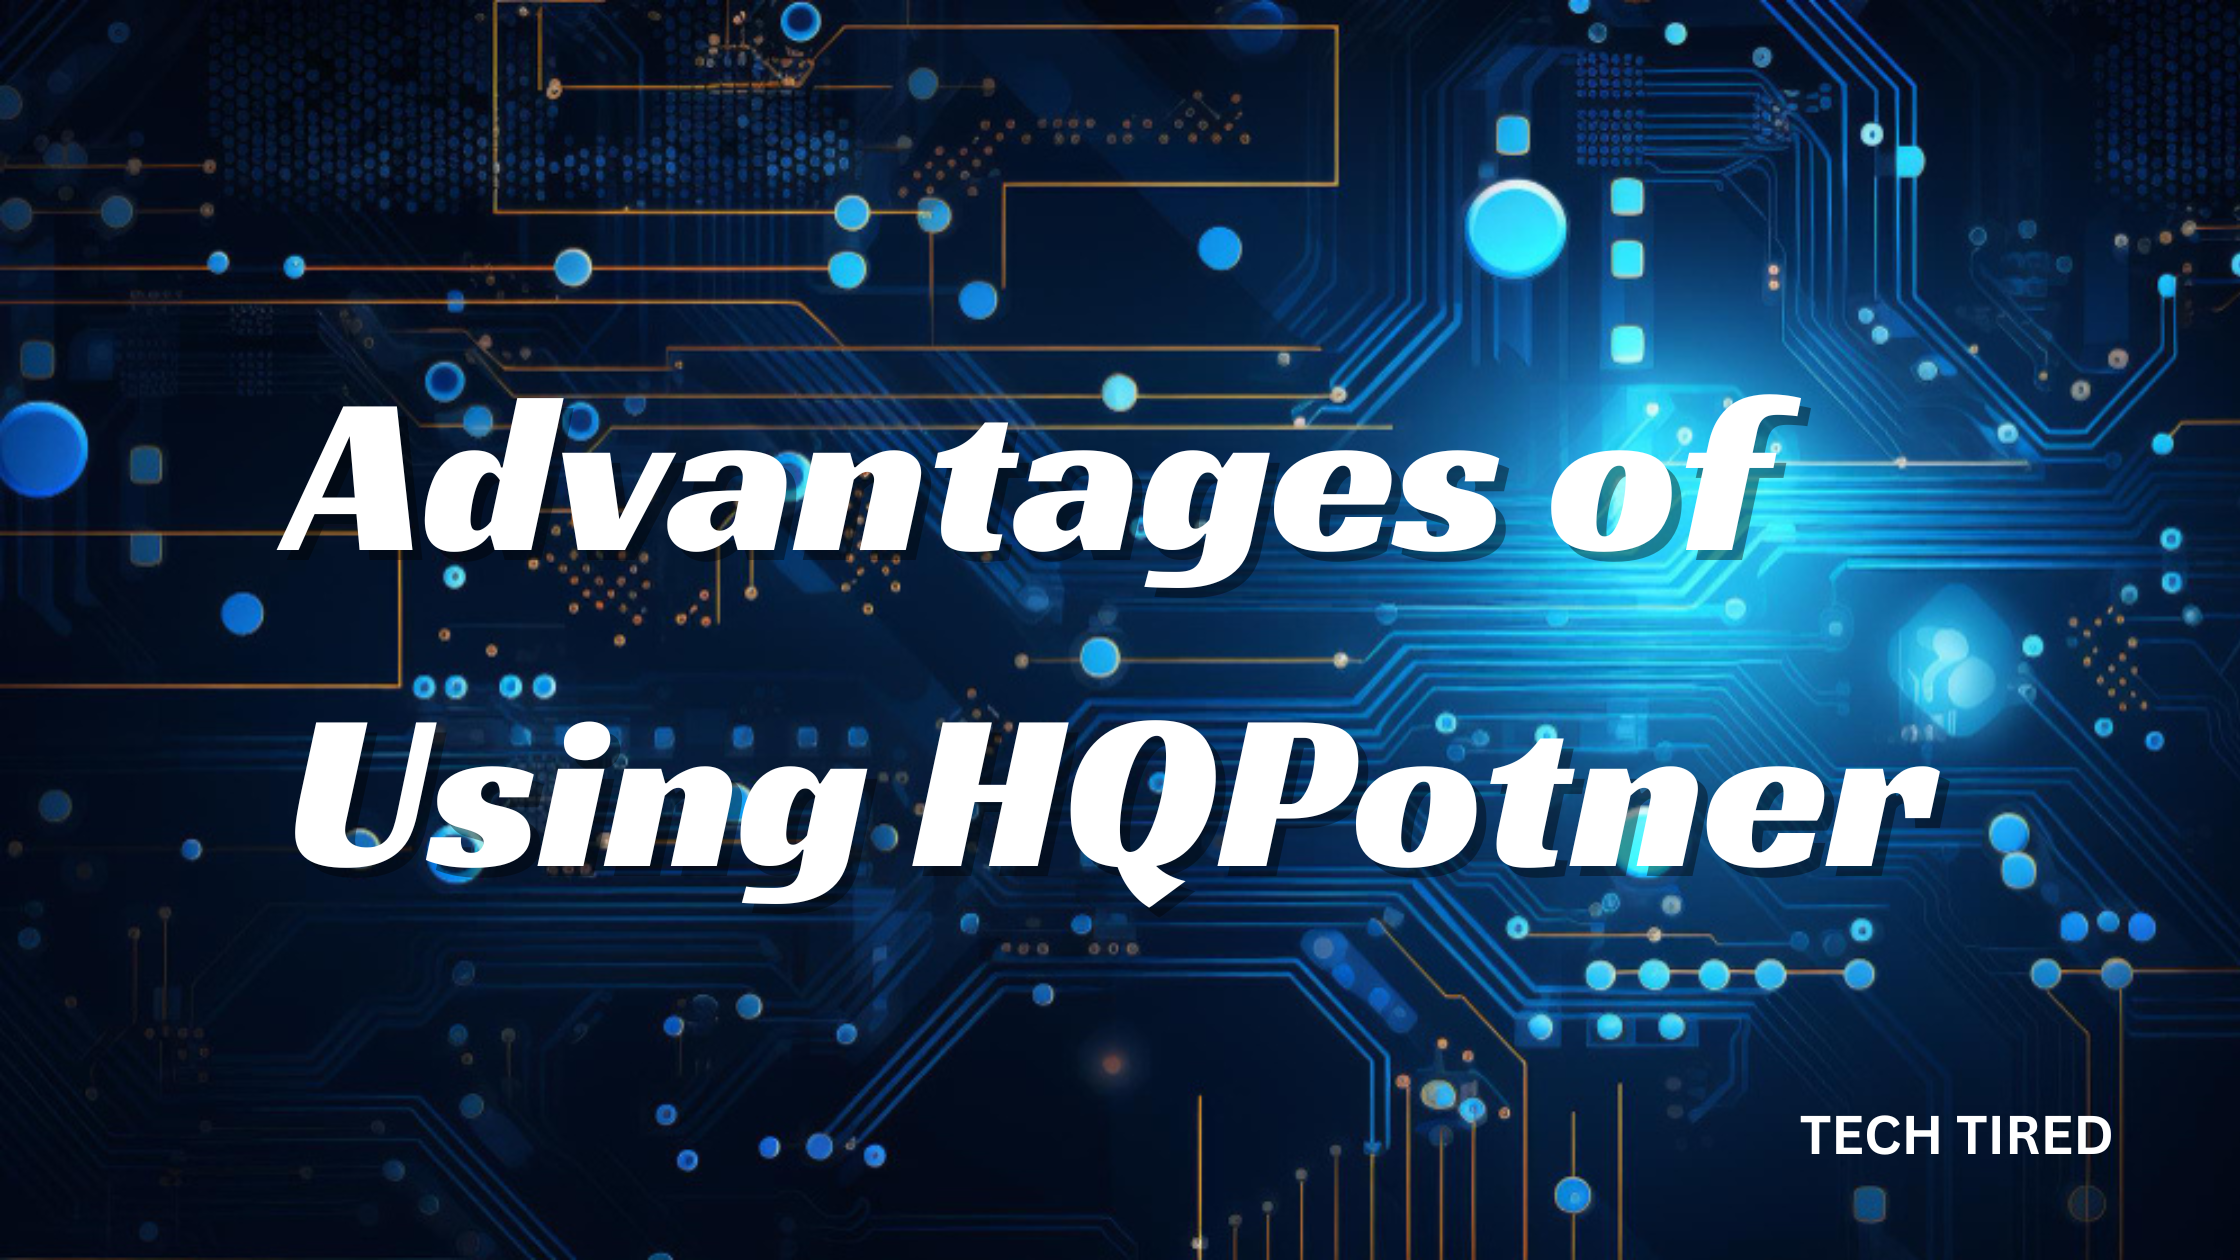 Advantages of Using HQPotner